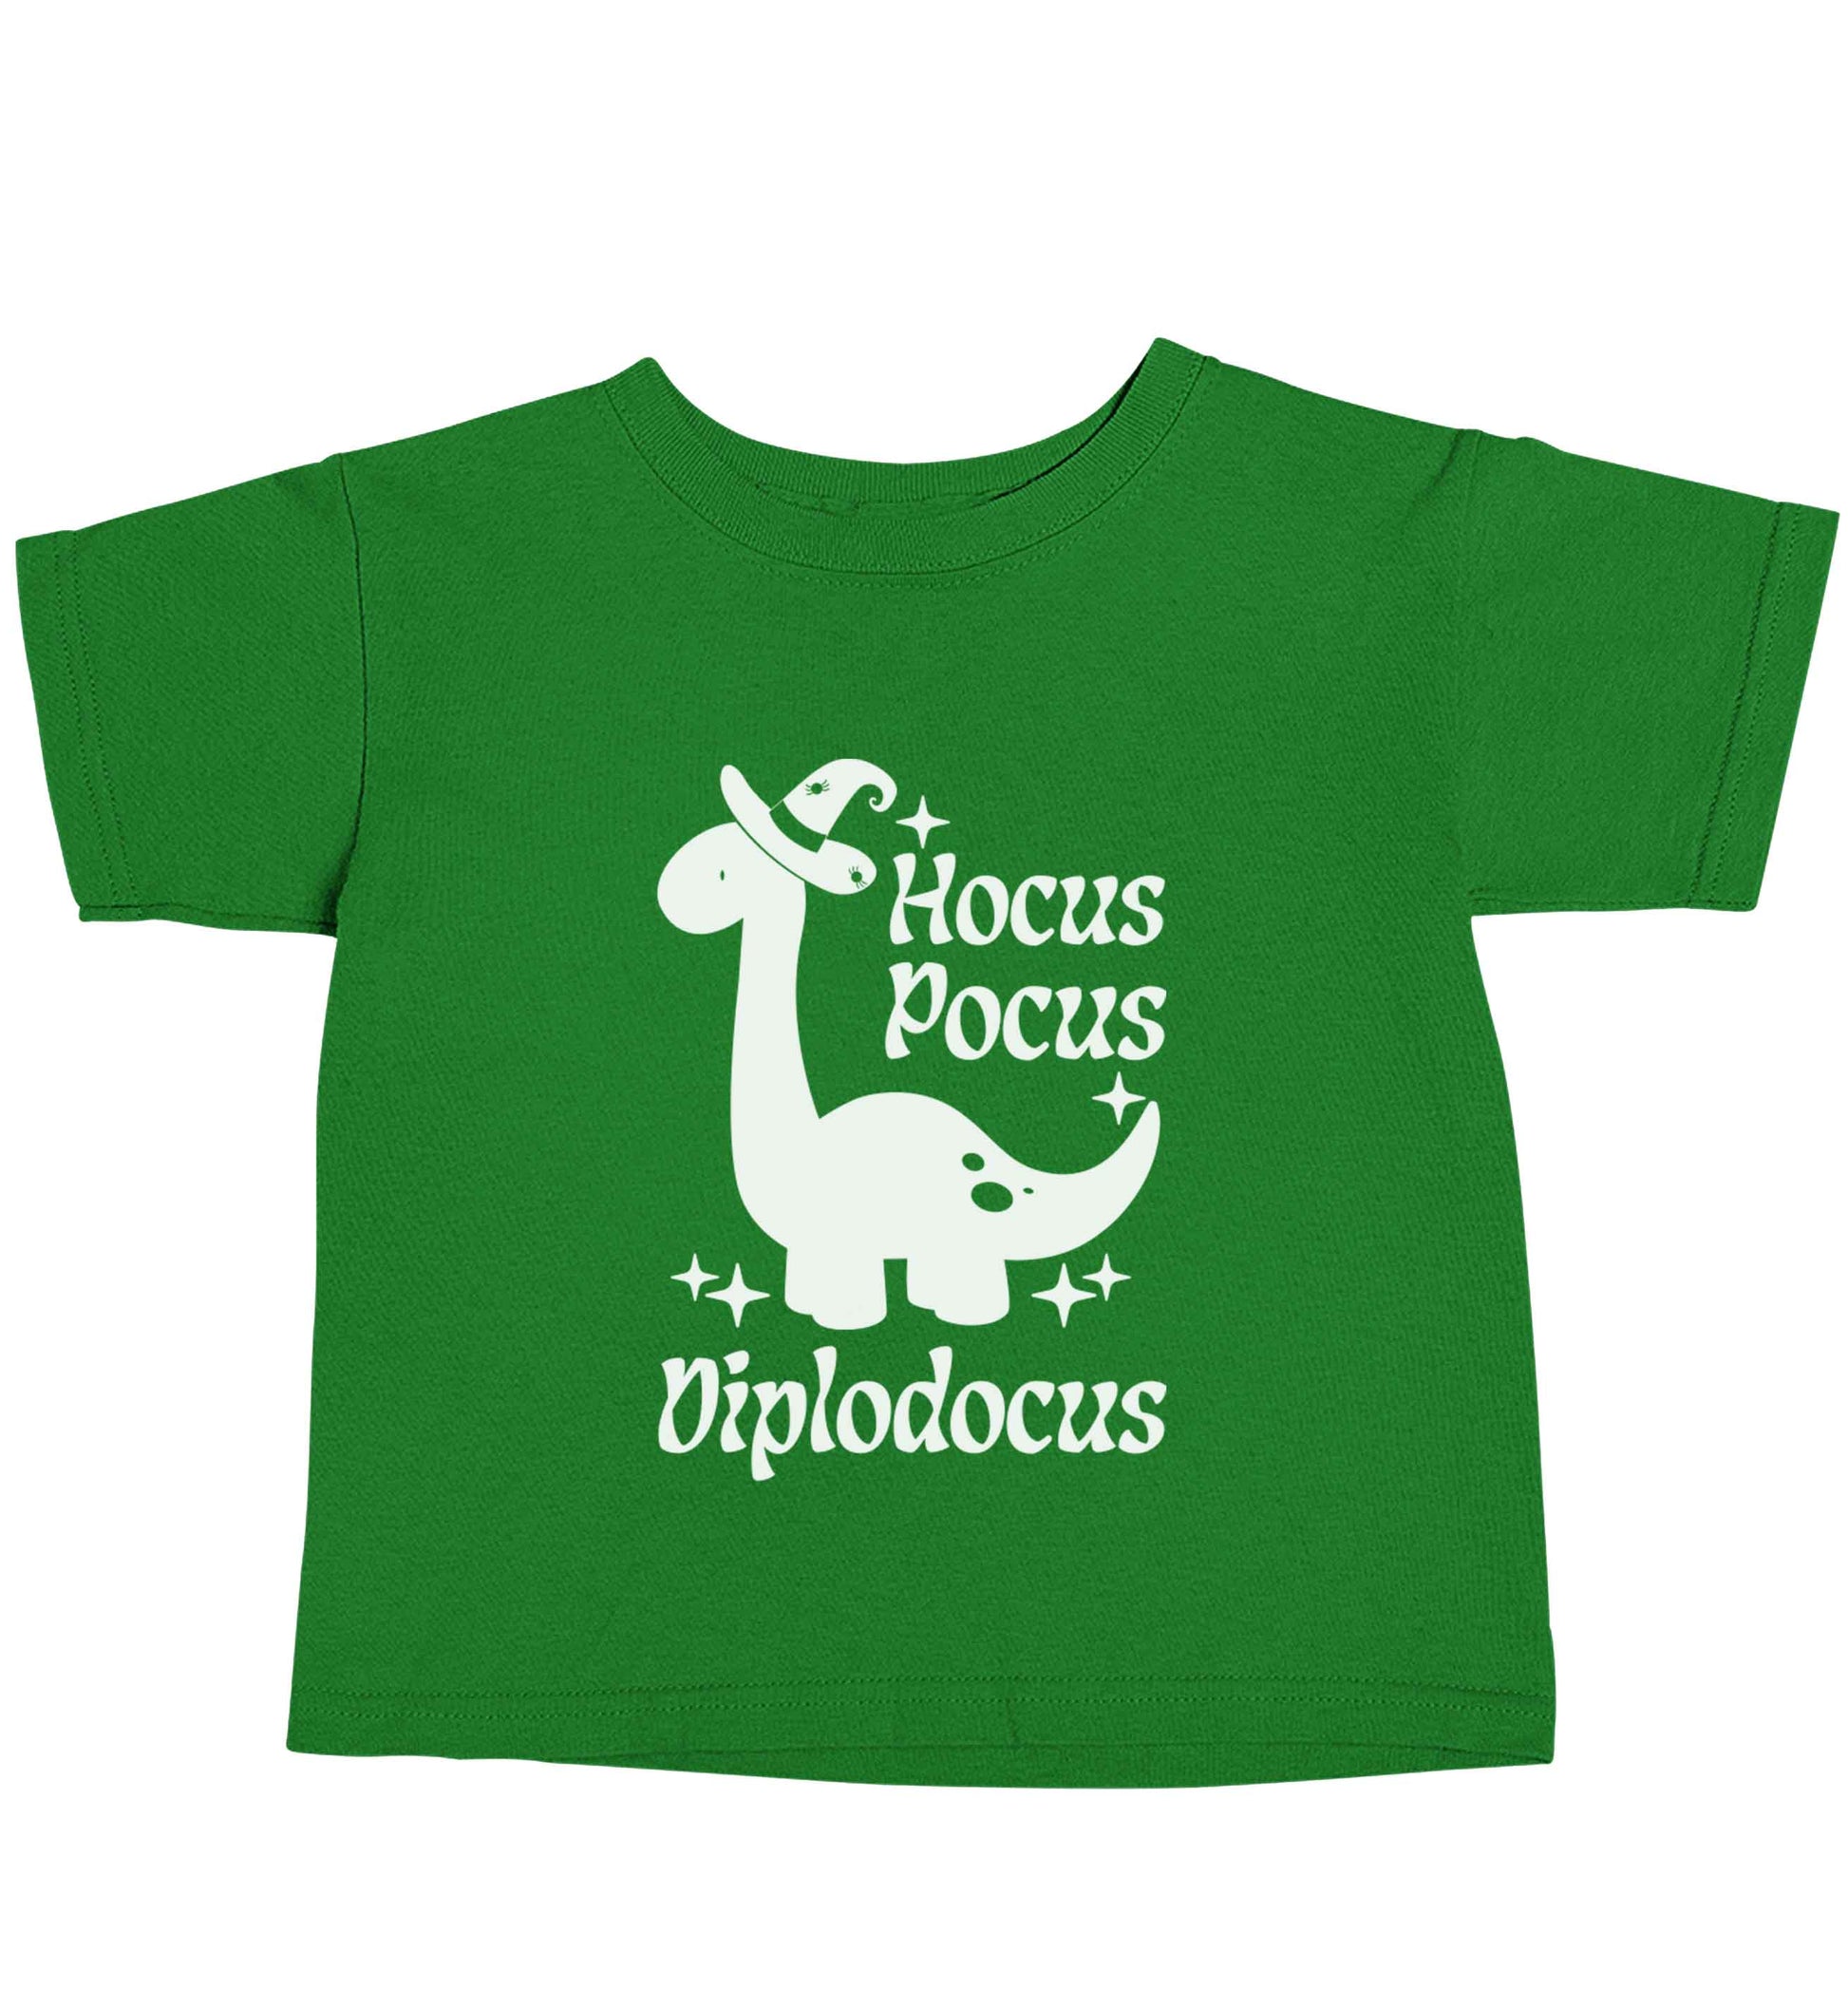 Hocus pocus diplodocus Kit green baby toddler Tshirt 2 Years